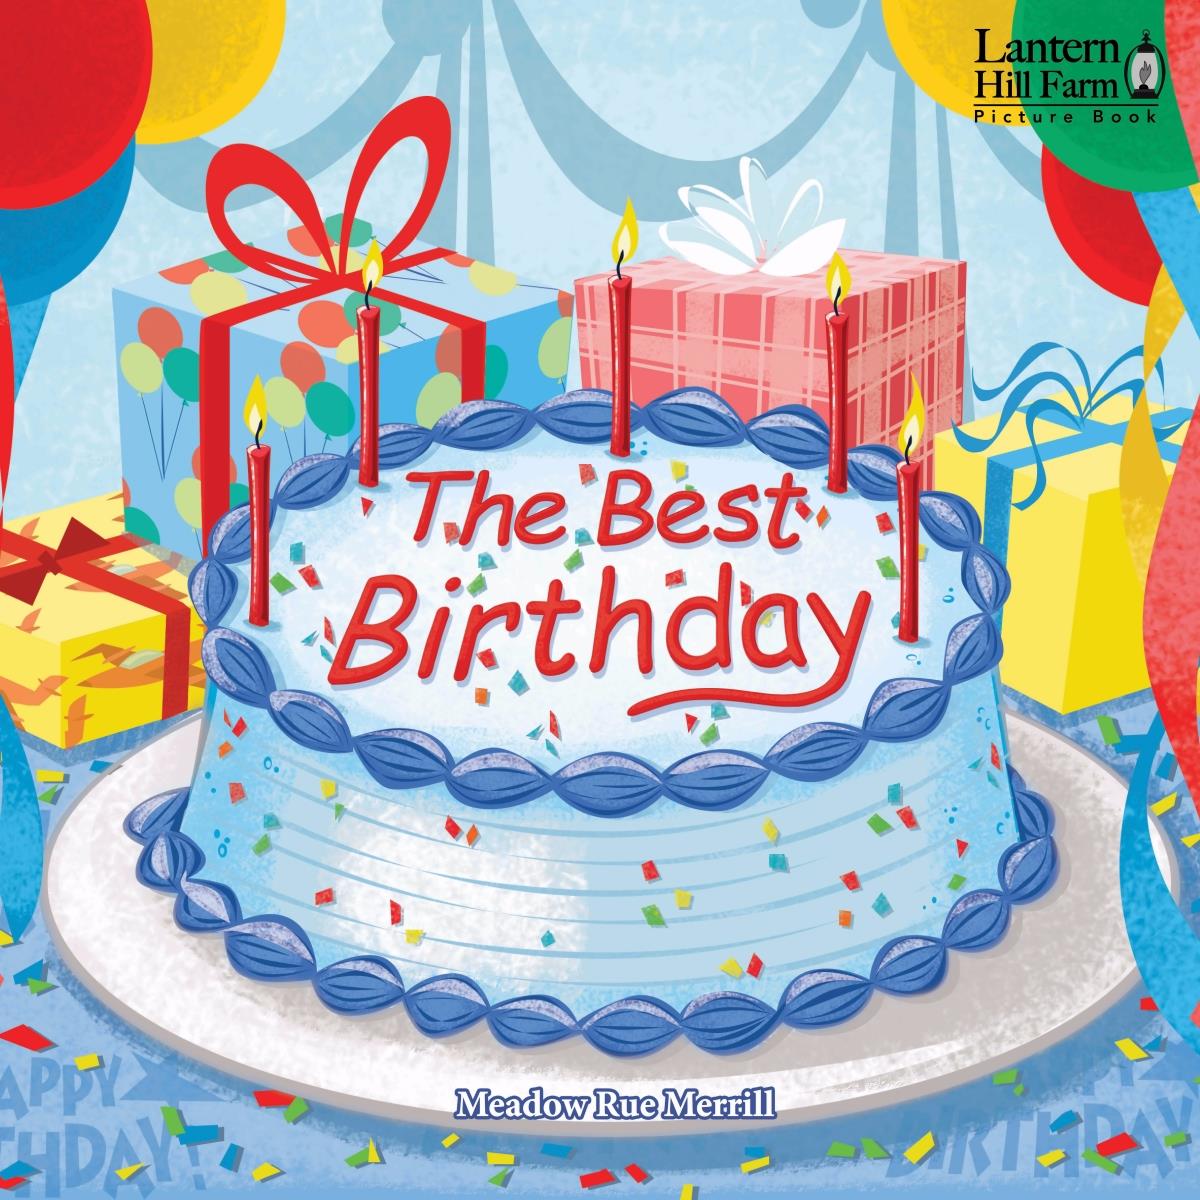 163787 The Best Birthday Hardcover